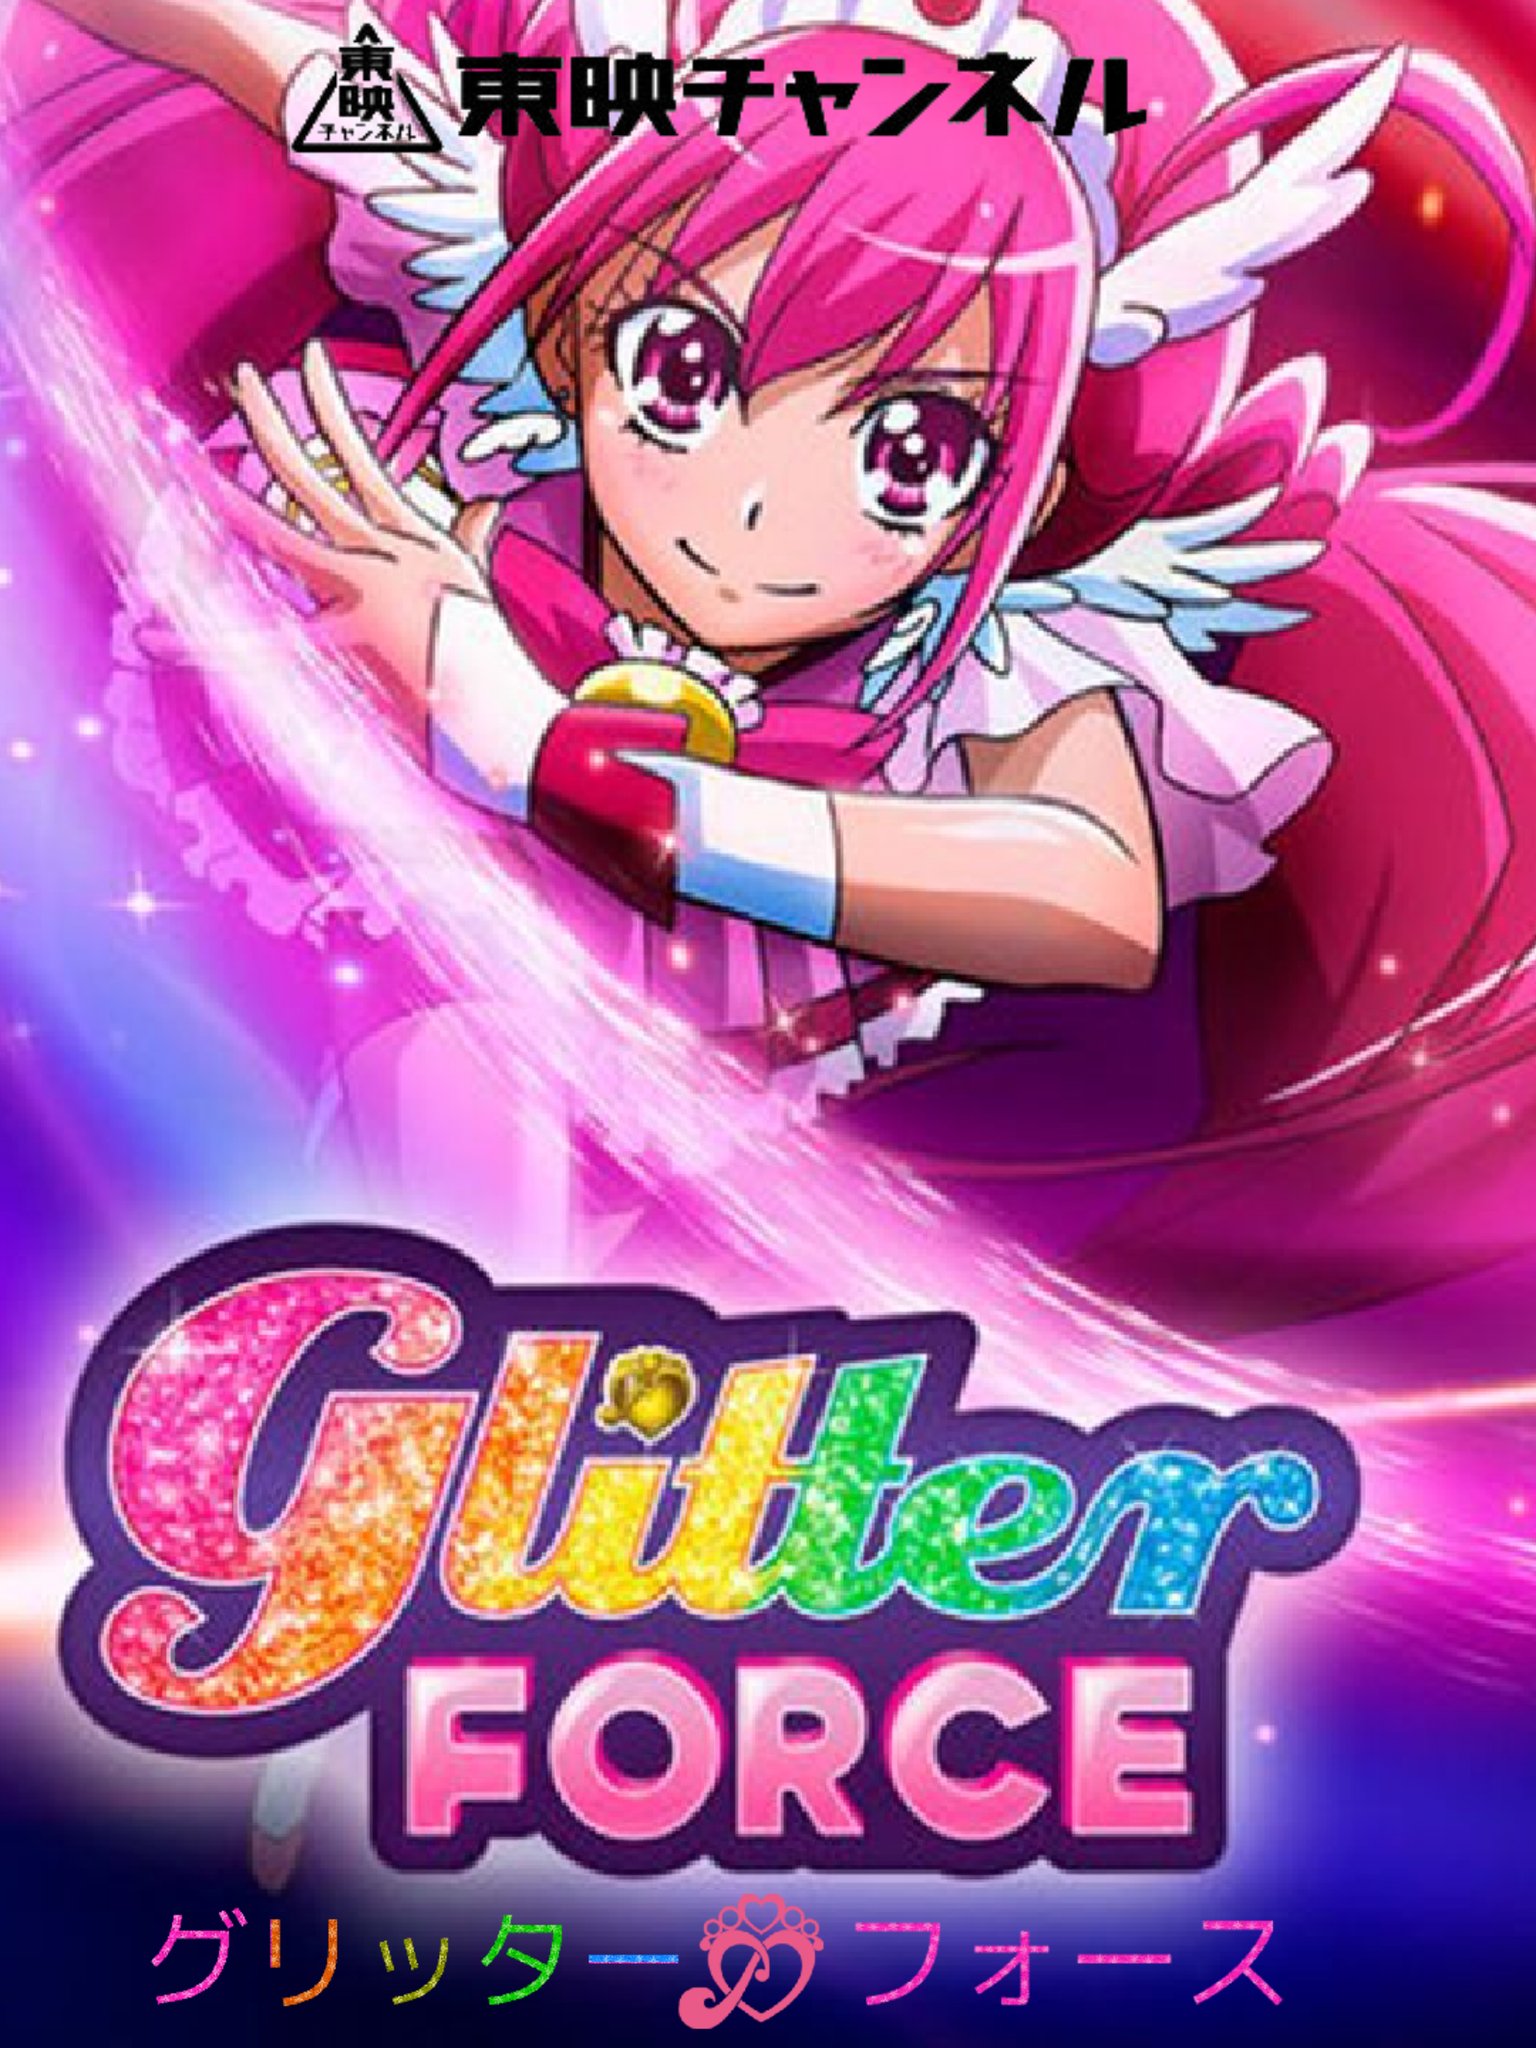 Stream Glitter Force Netflix Reboot  Believe In You by Music Guy  Anime and Disney Fan 1  Listen online for free on SoundCloud